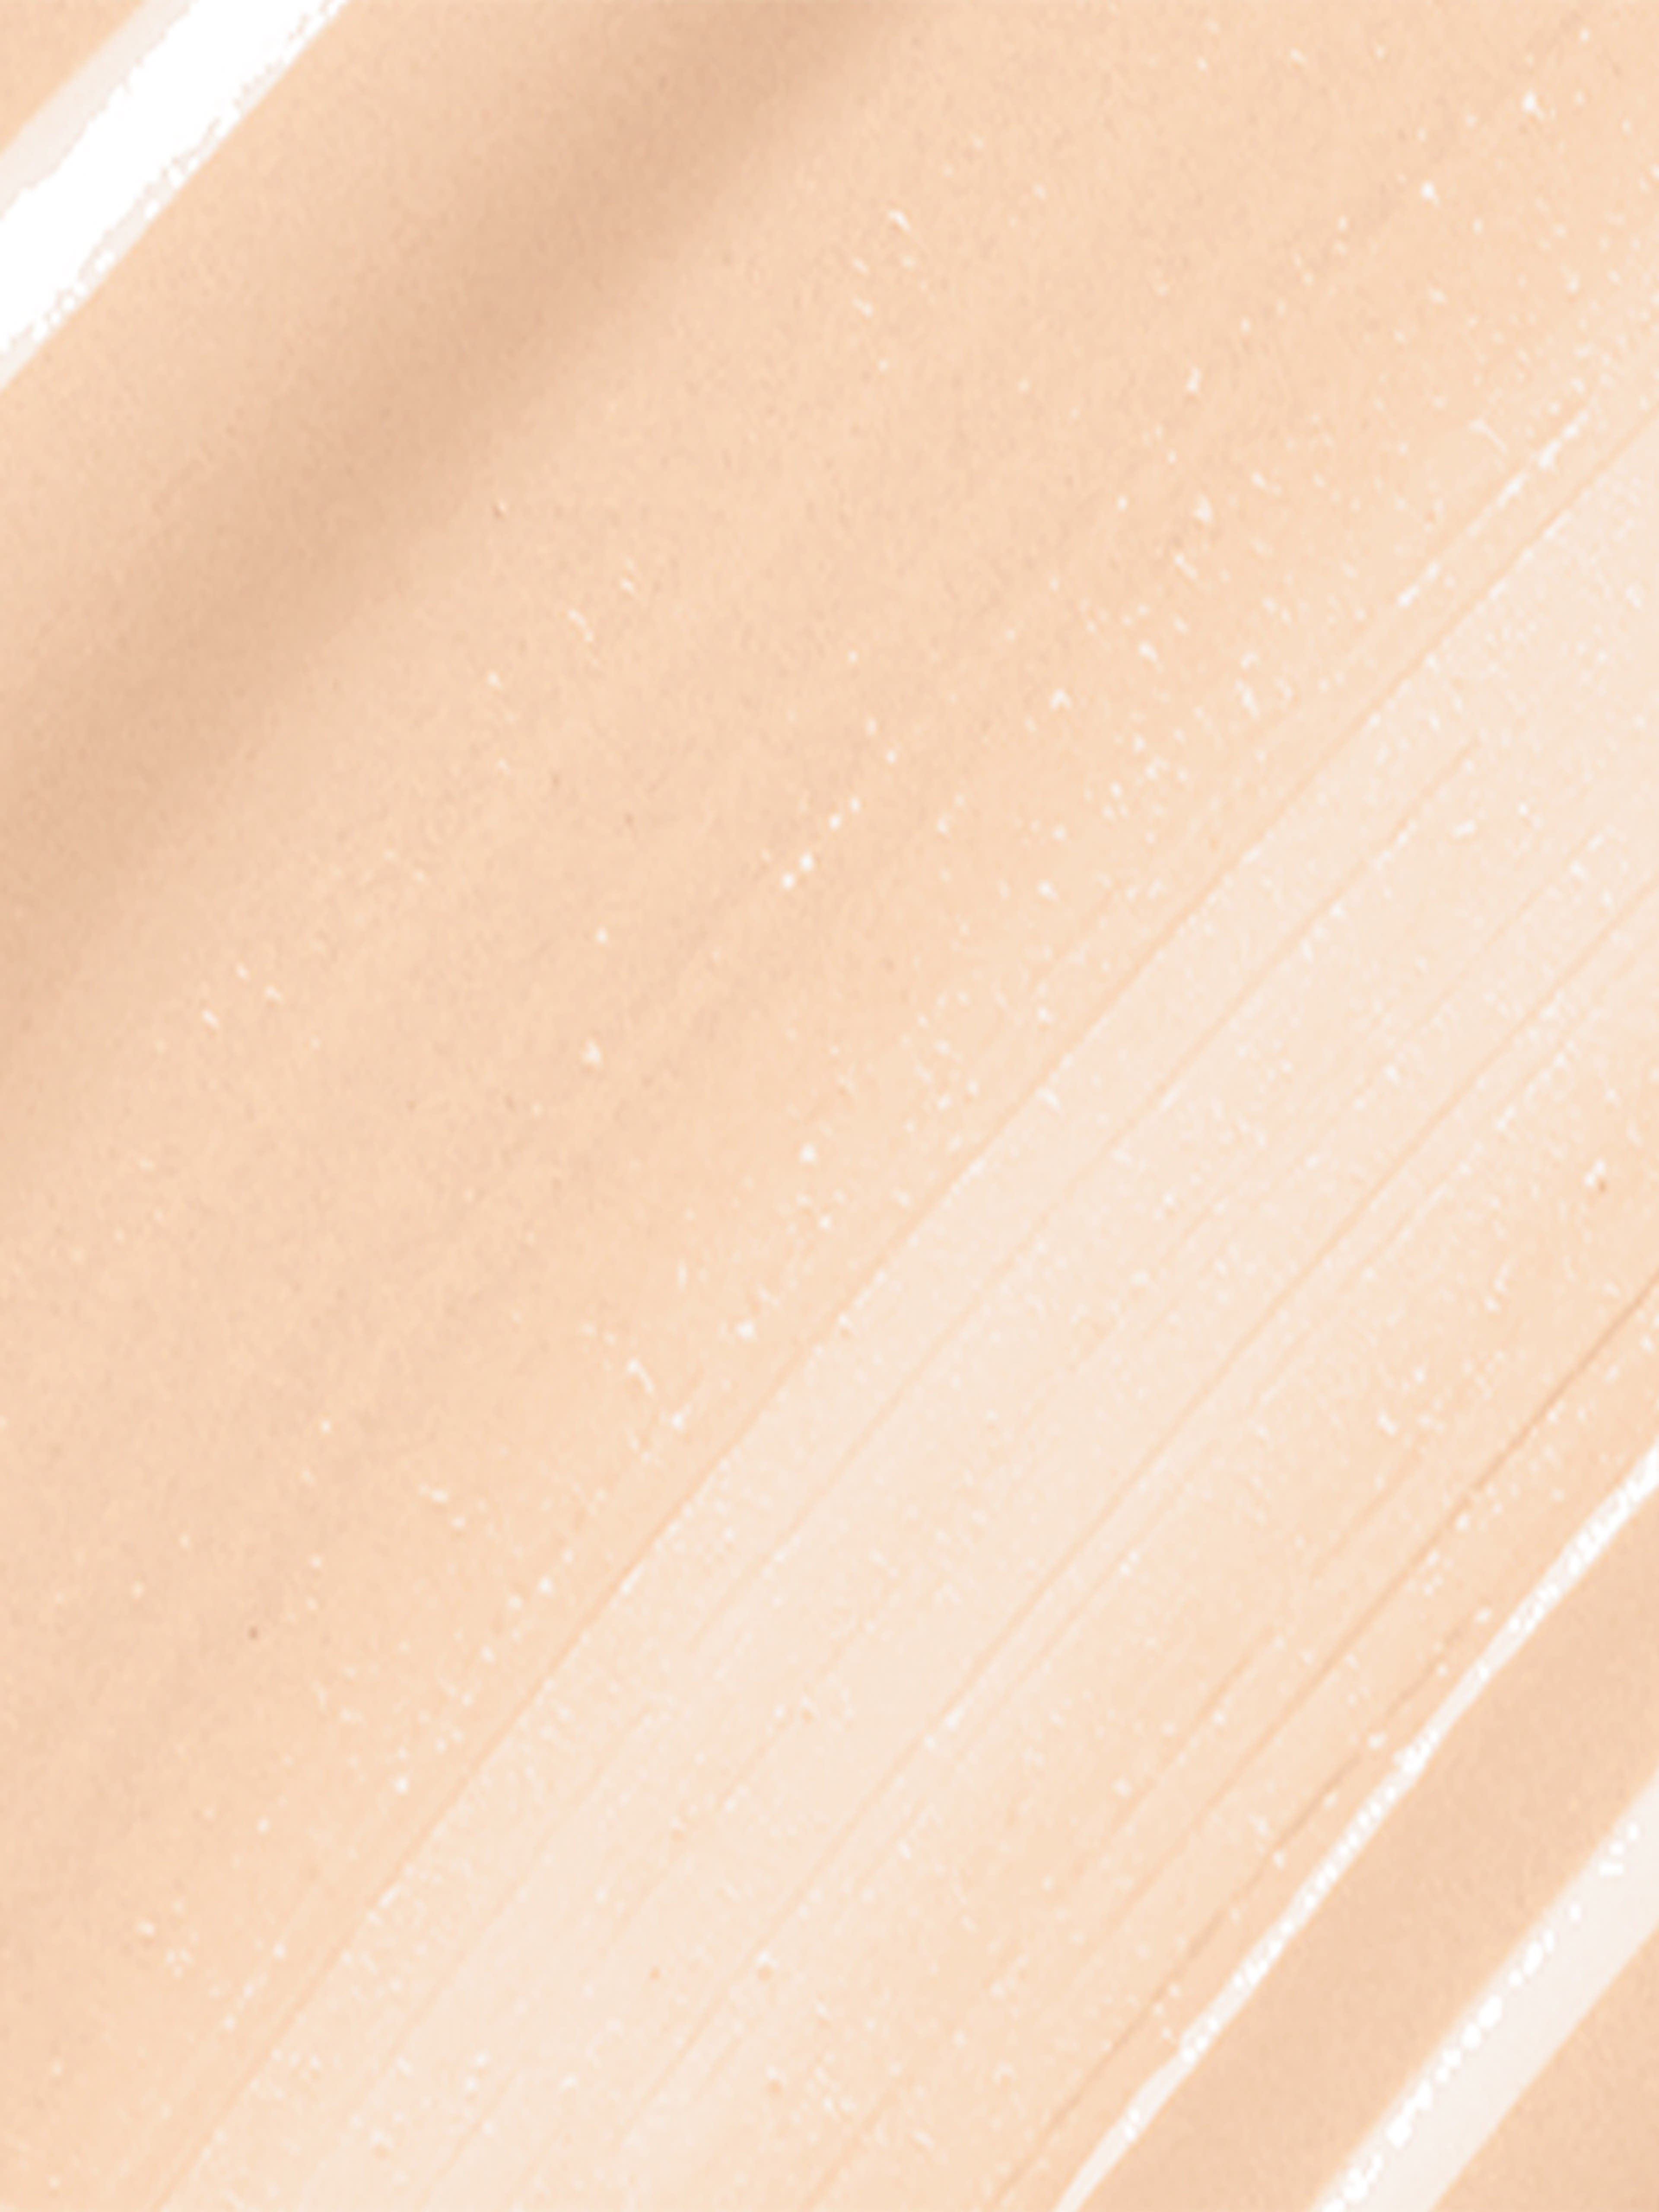 L'Oréal Paris True Match Nude színezett szérum /5,0-2 - 1 db-3